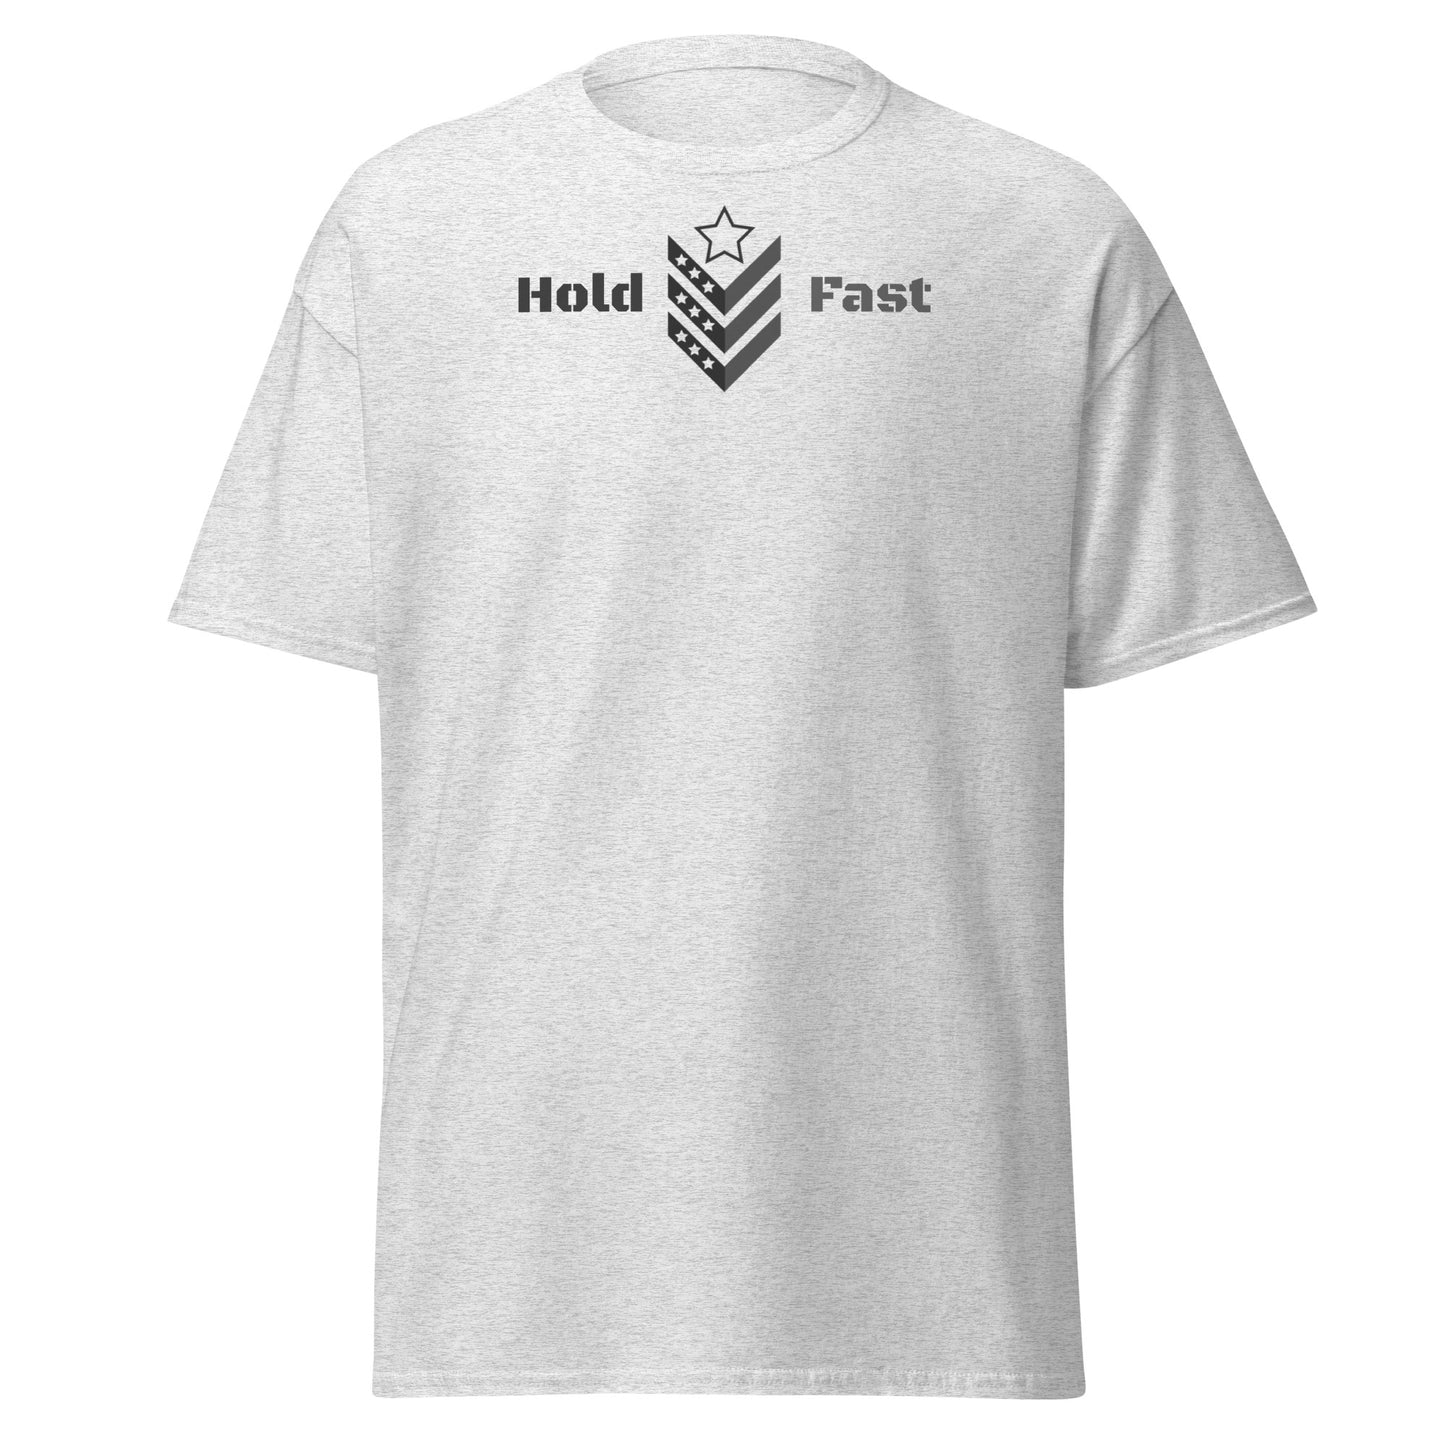 HBG "Hold Fast" Men's T-Shirt